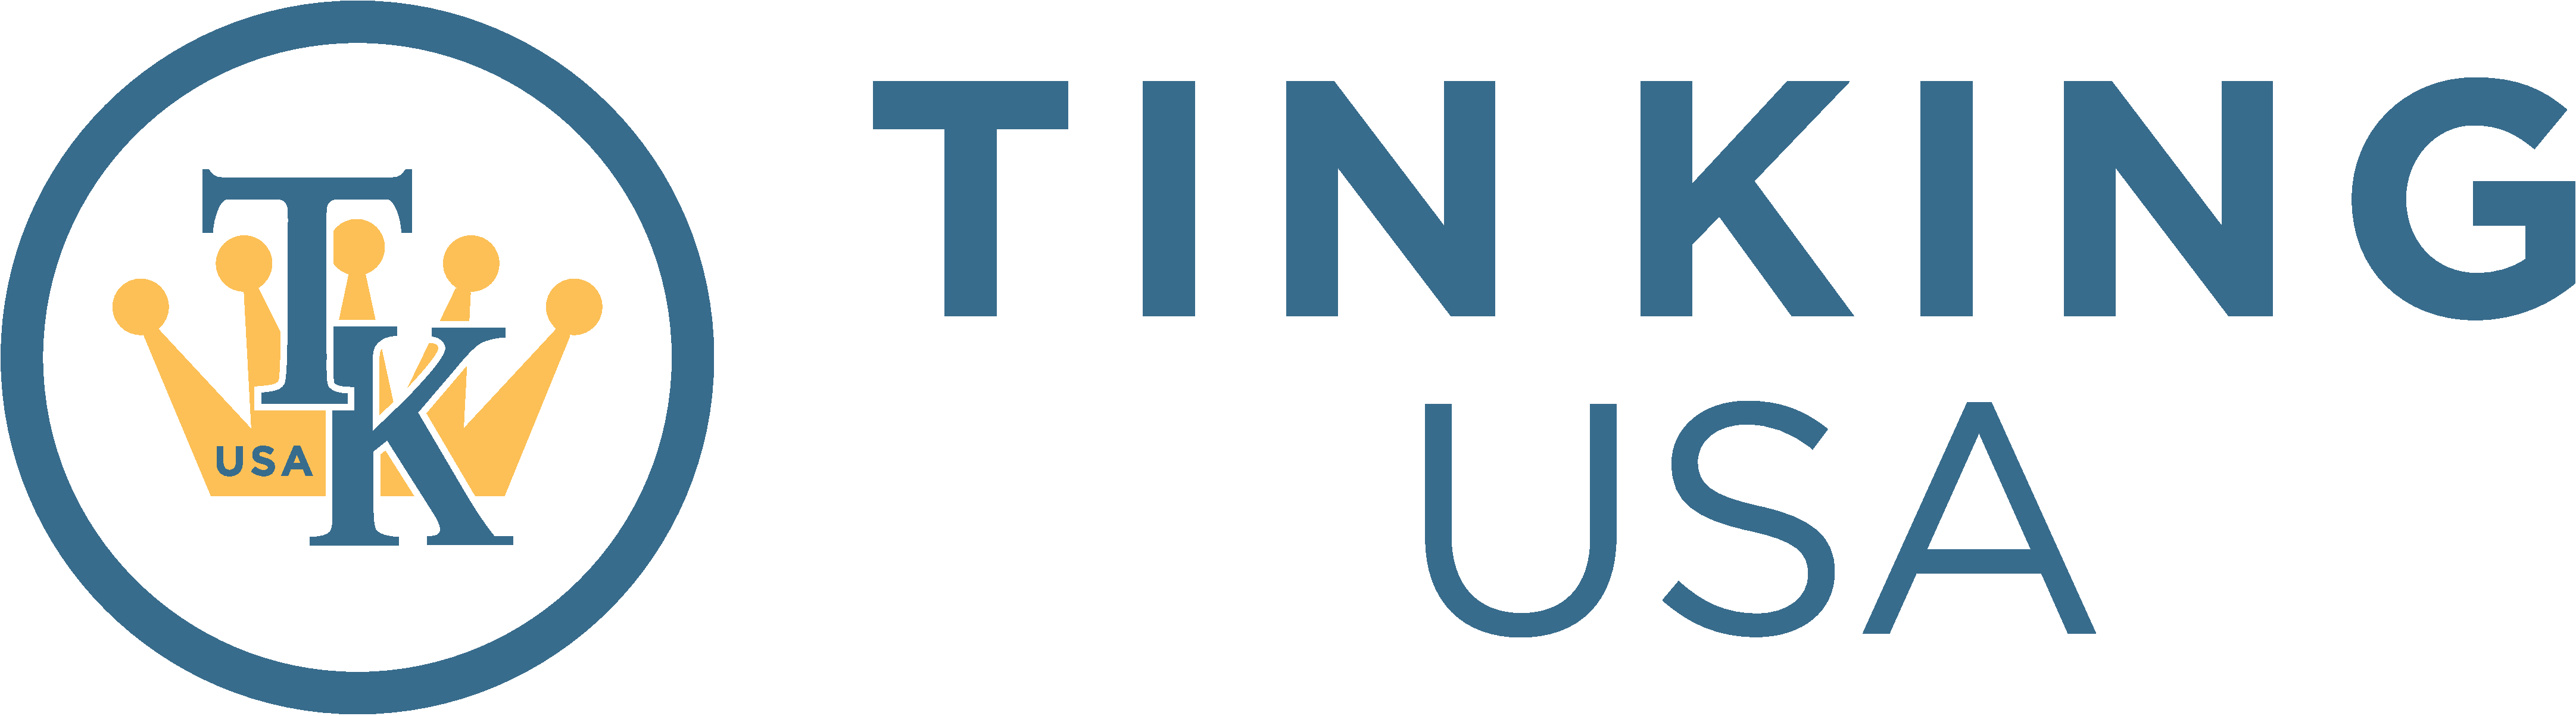 Tin King USA-Canada logo